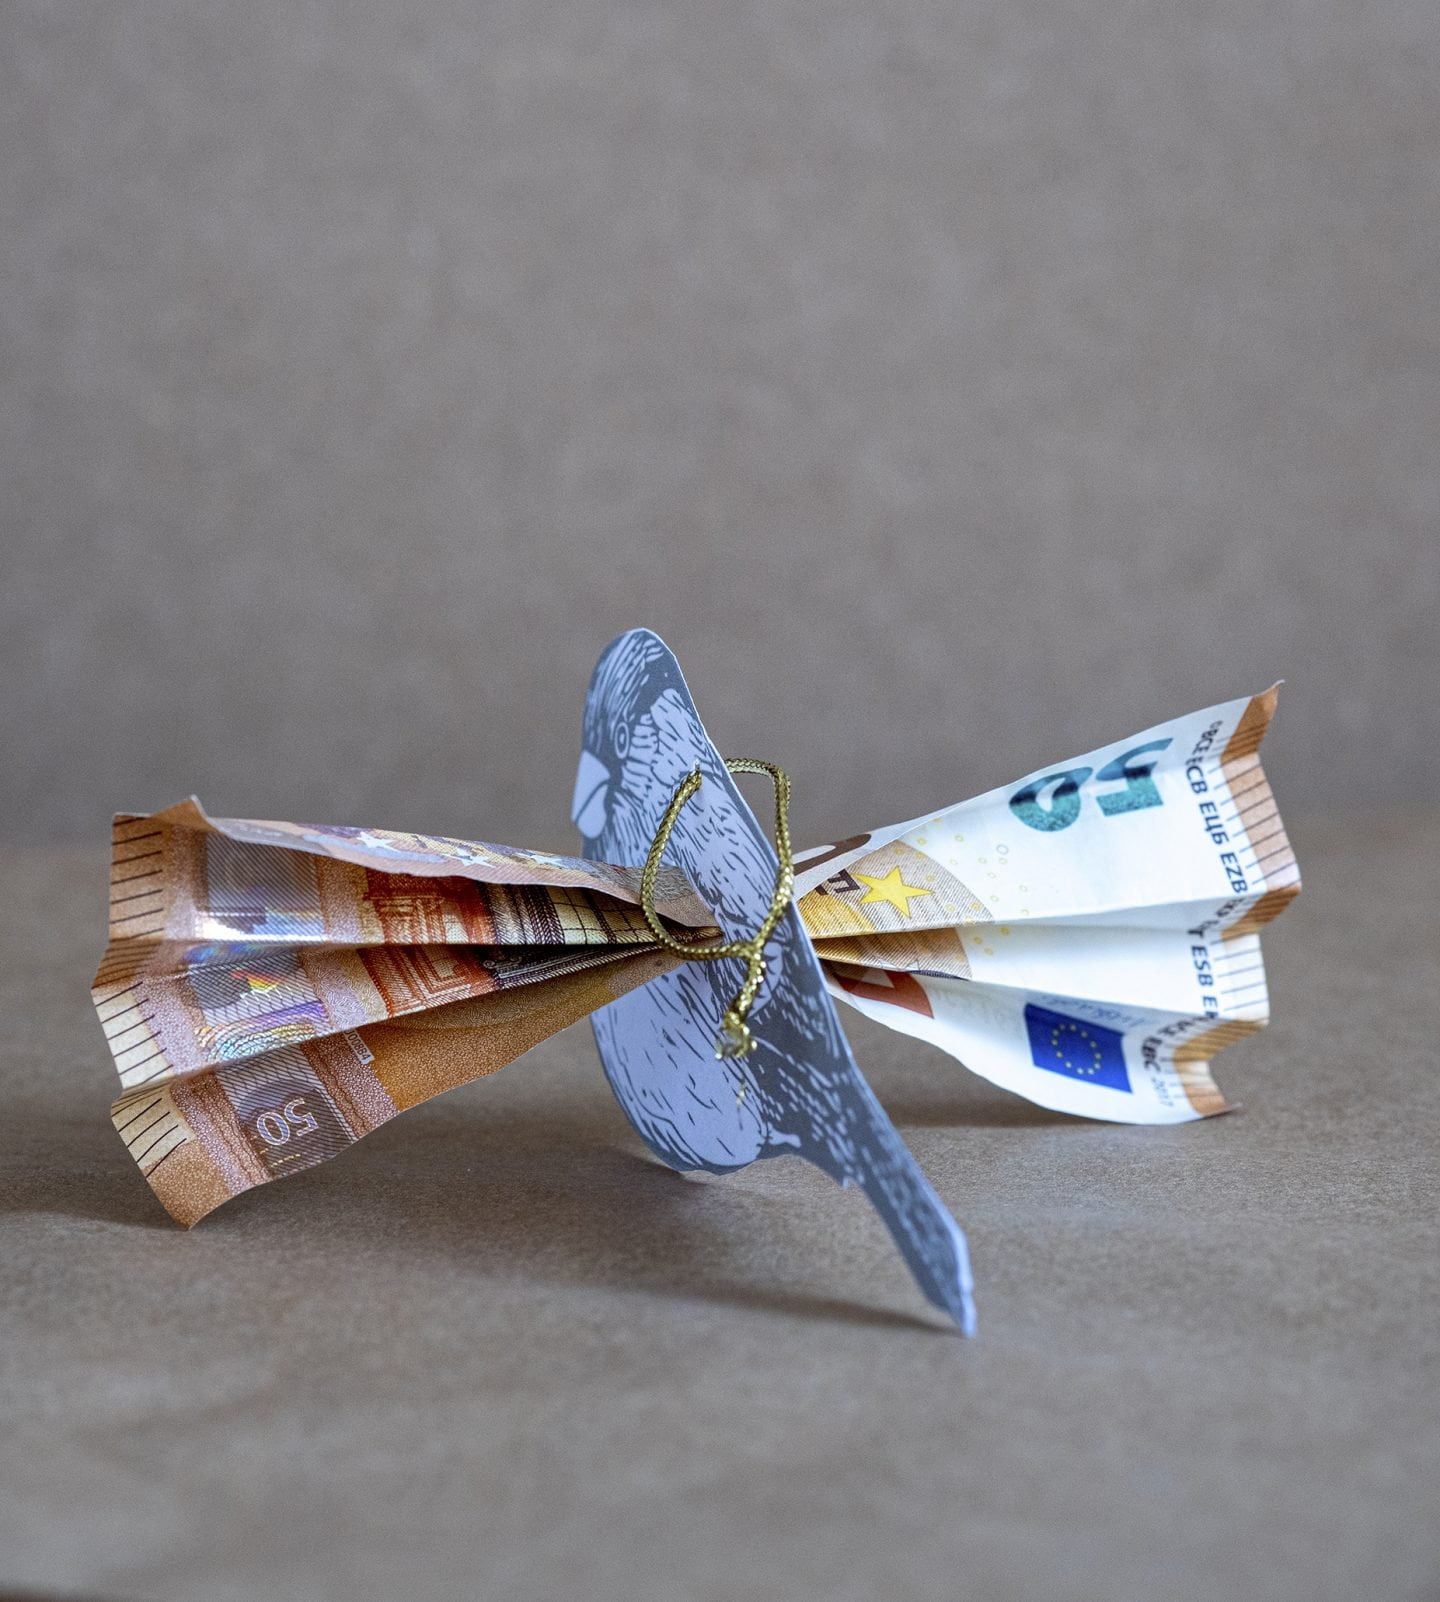 Verrassend Geld als cadeau voor Bruiloft en verjaardag - Diy cadeau – ElsaRblog FI-52